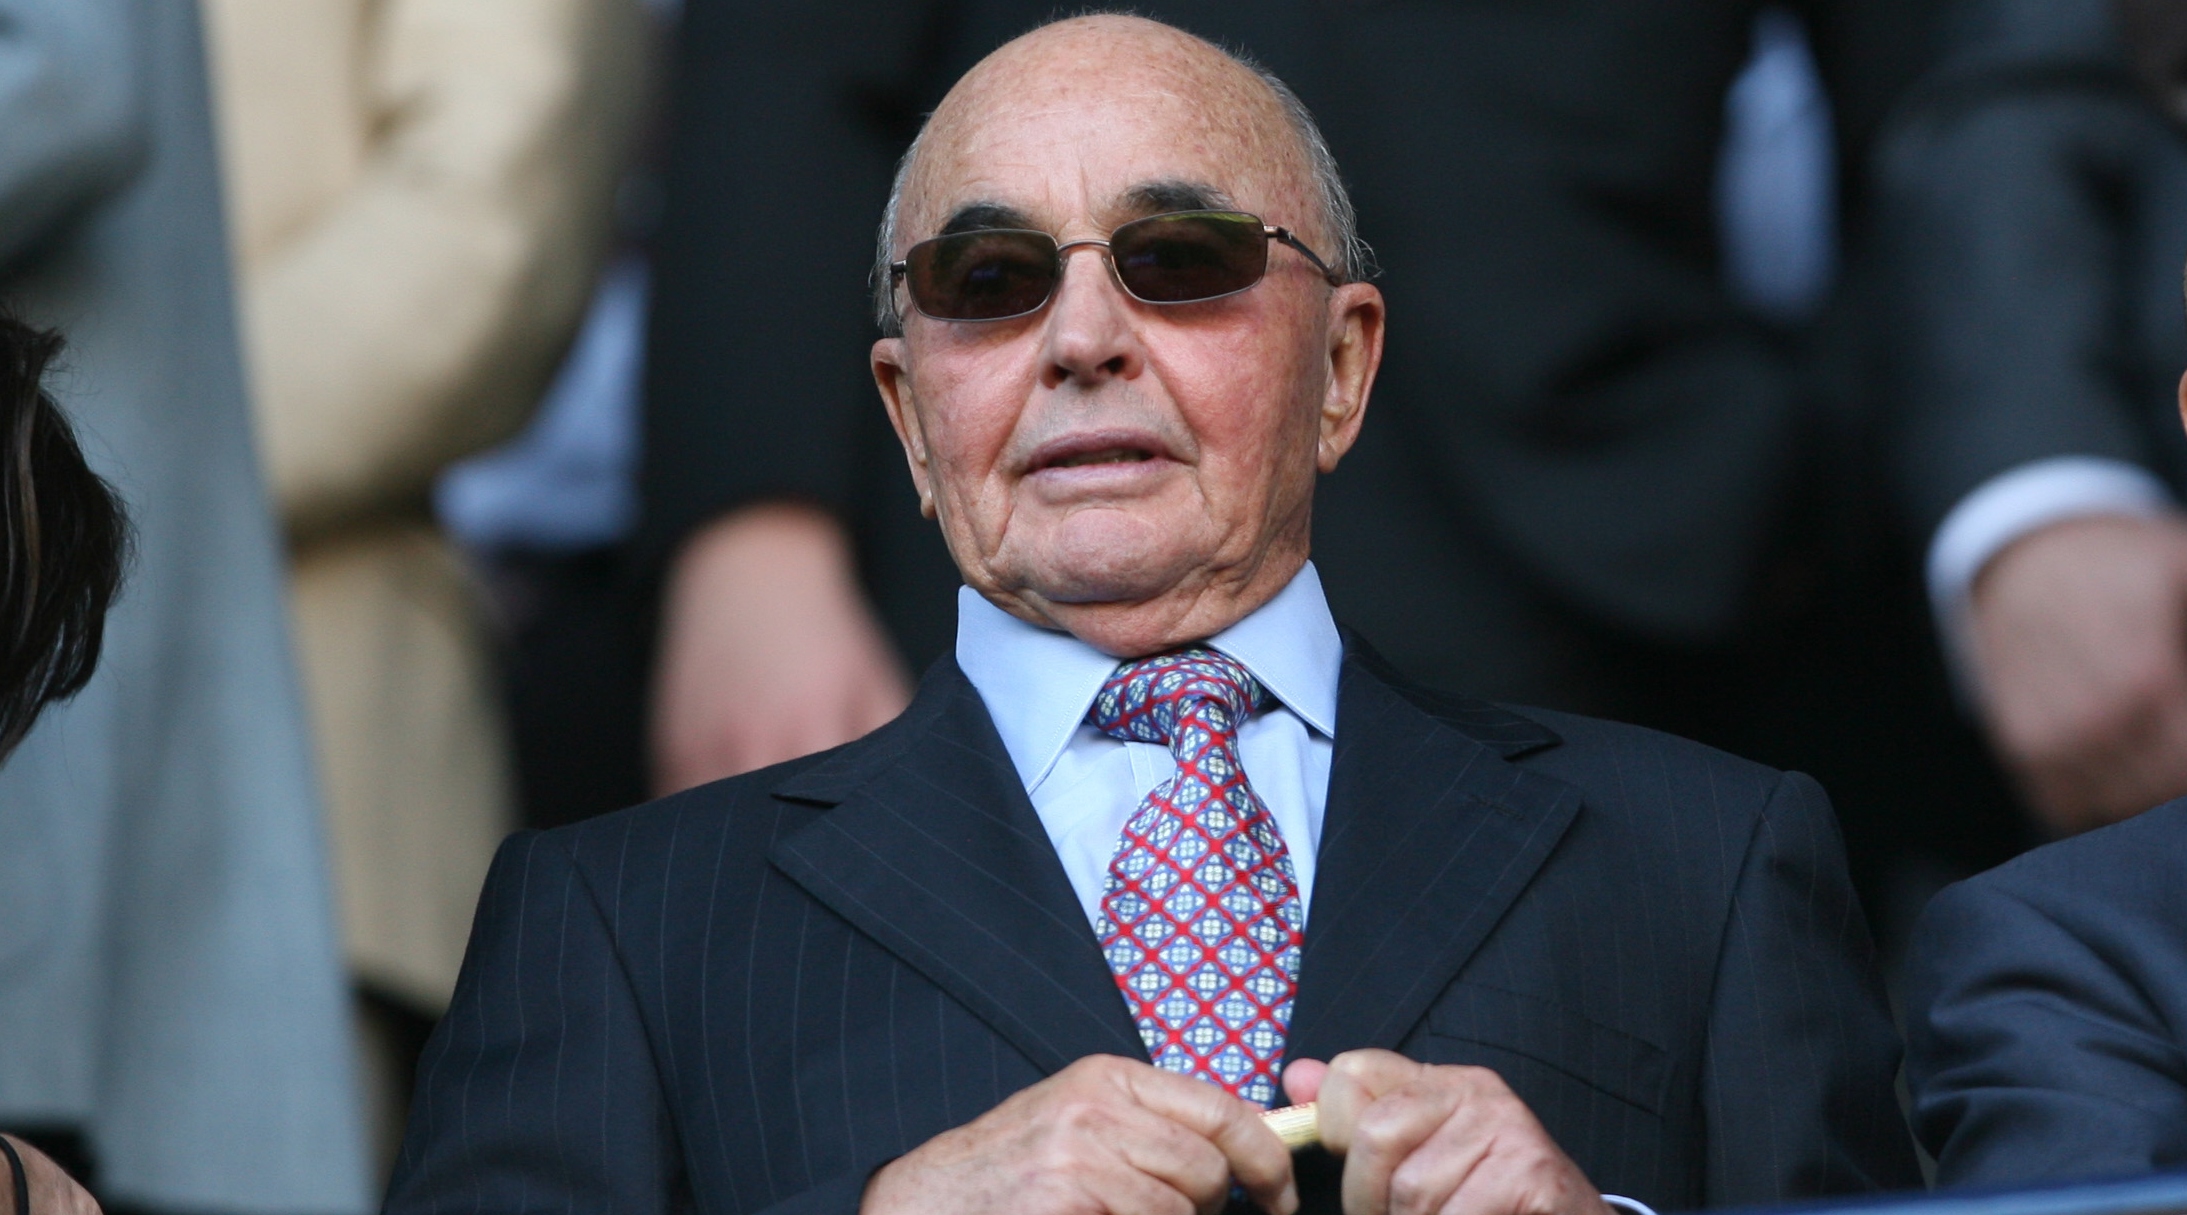 Tottenham Hotspur owner Joe Lewis, wearing sunglasses